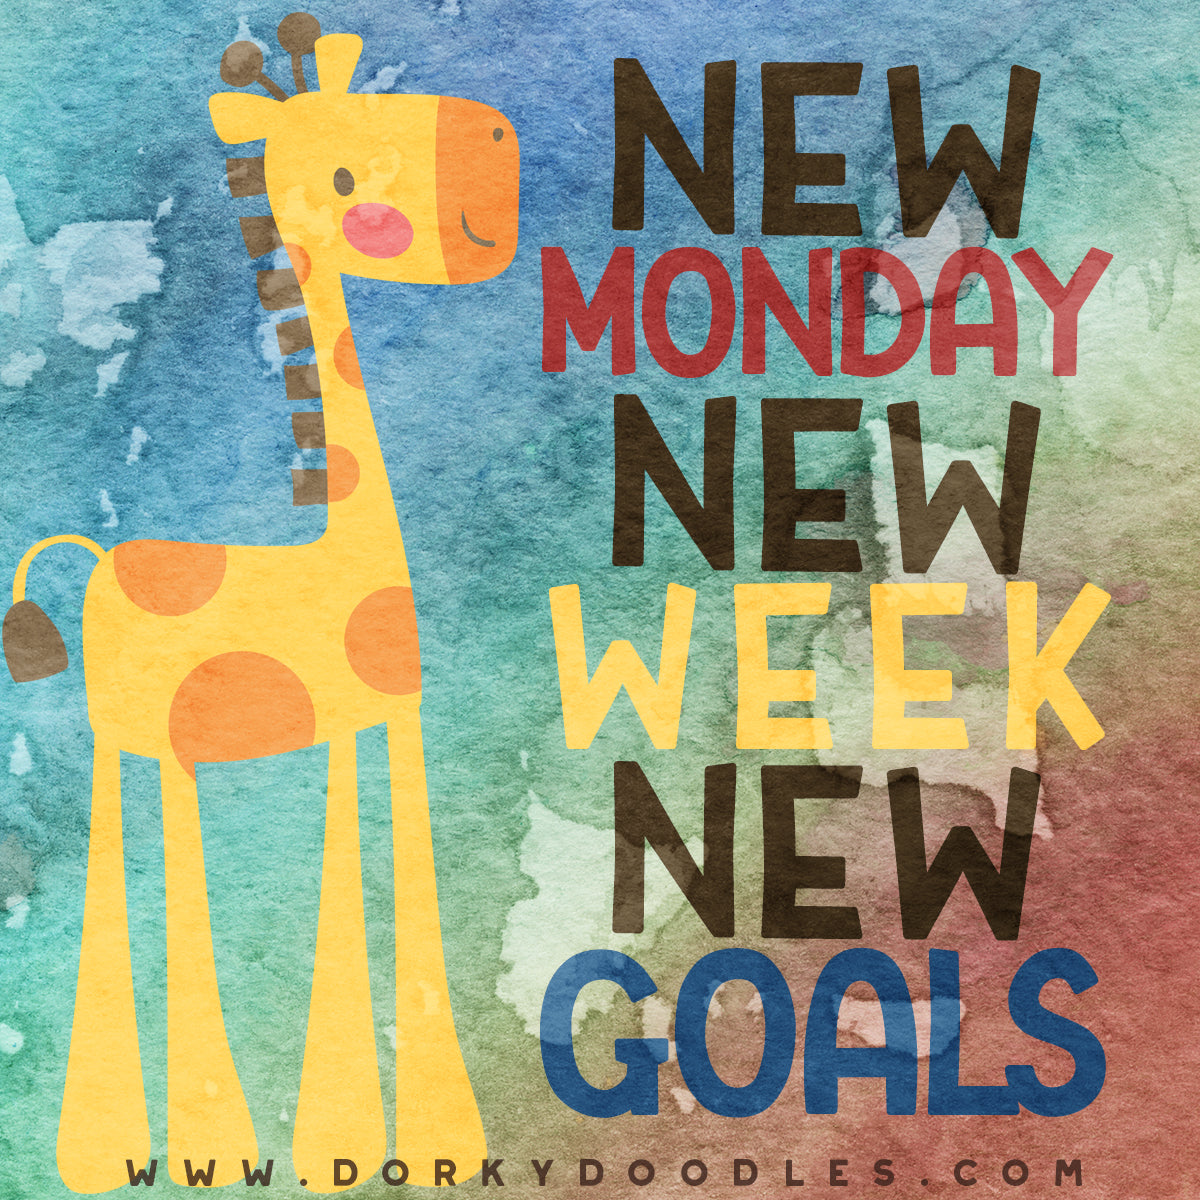 New Monday New Week New Goals Motivation